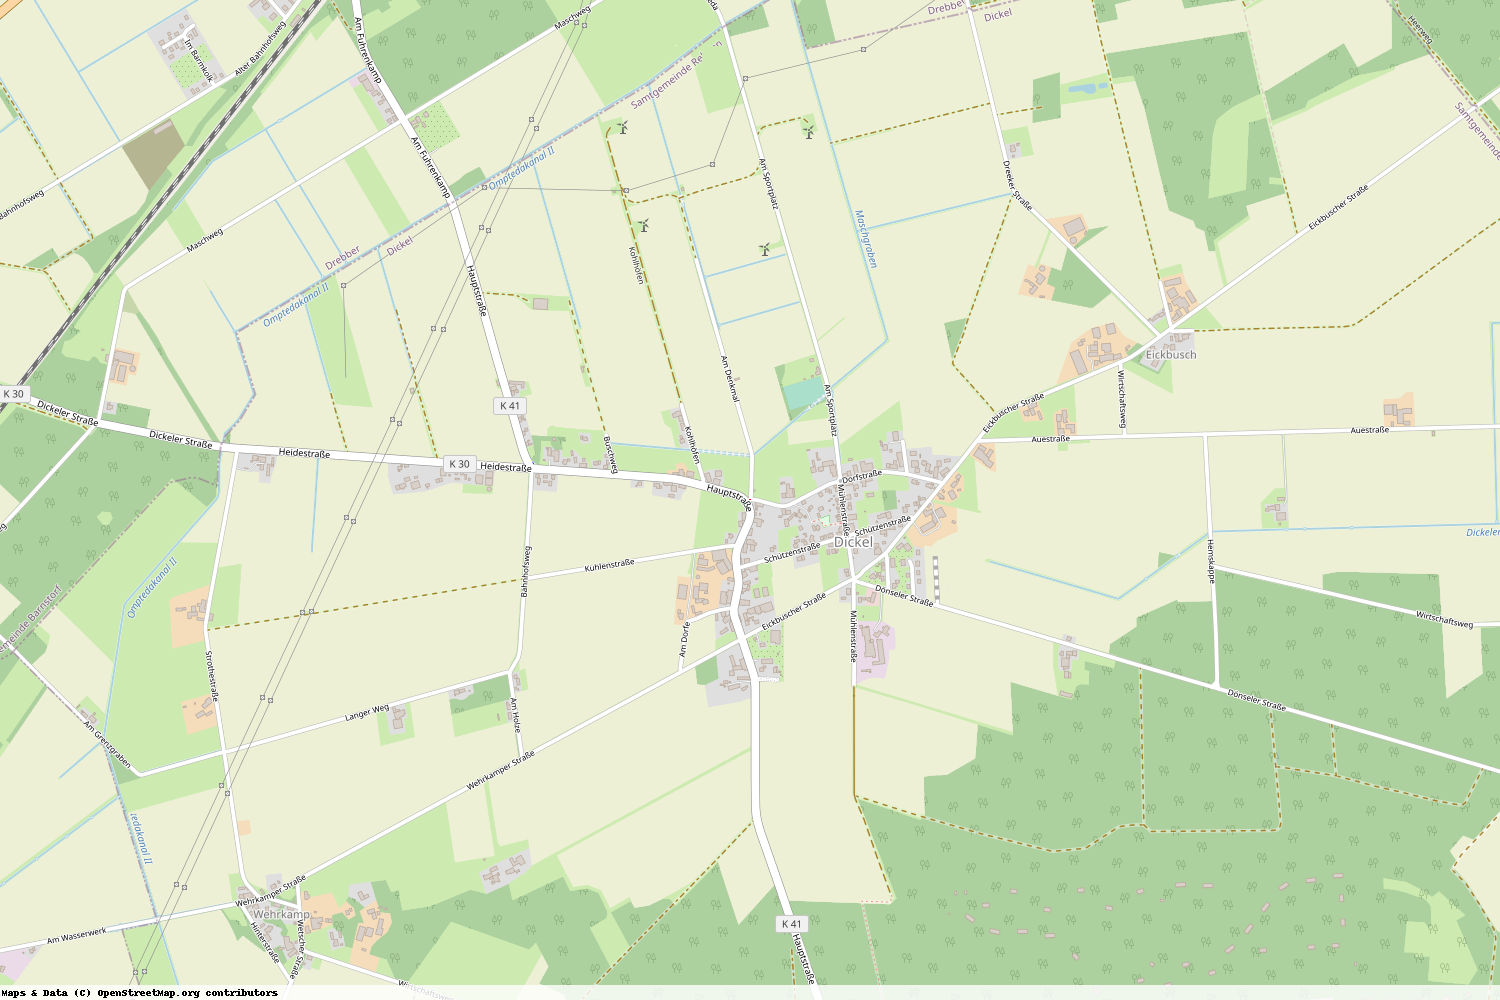 Ist gerade Stromausfall in Niedersachsen - Diepholz - Dickel?